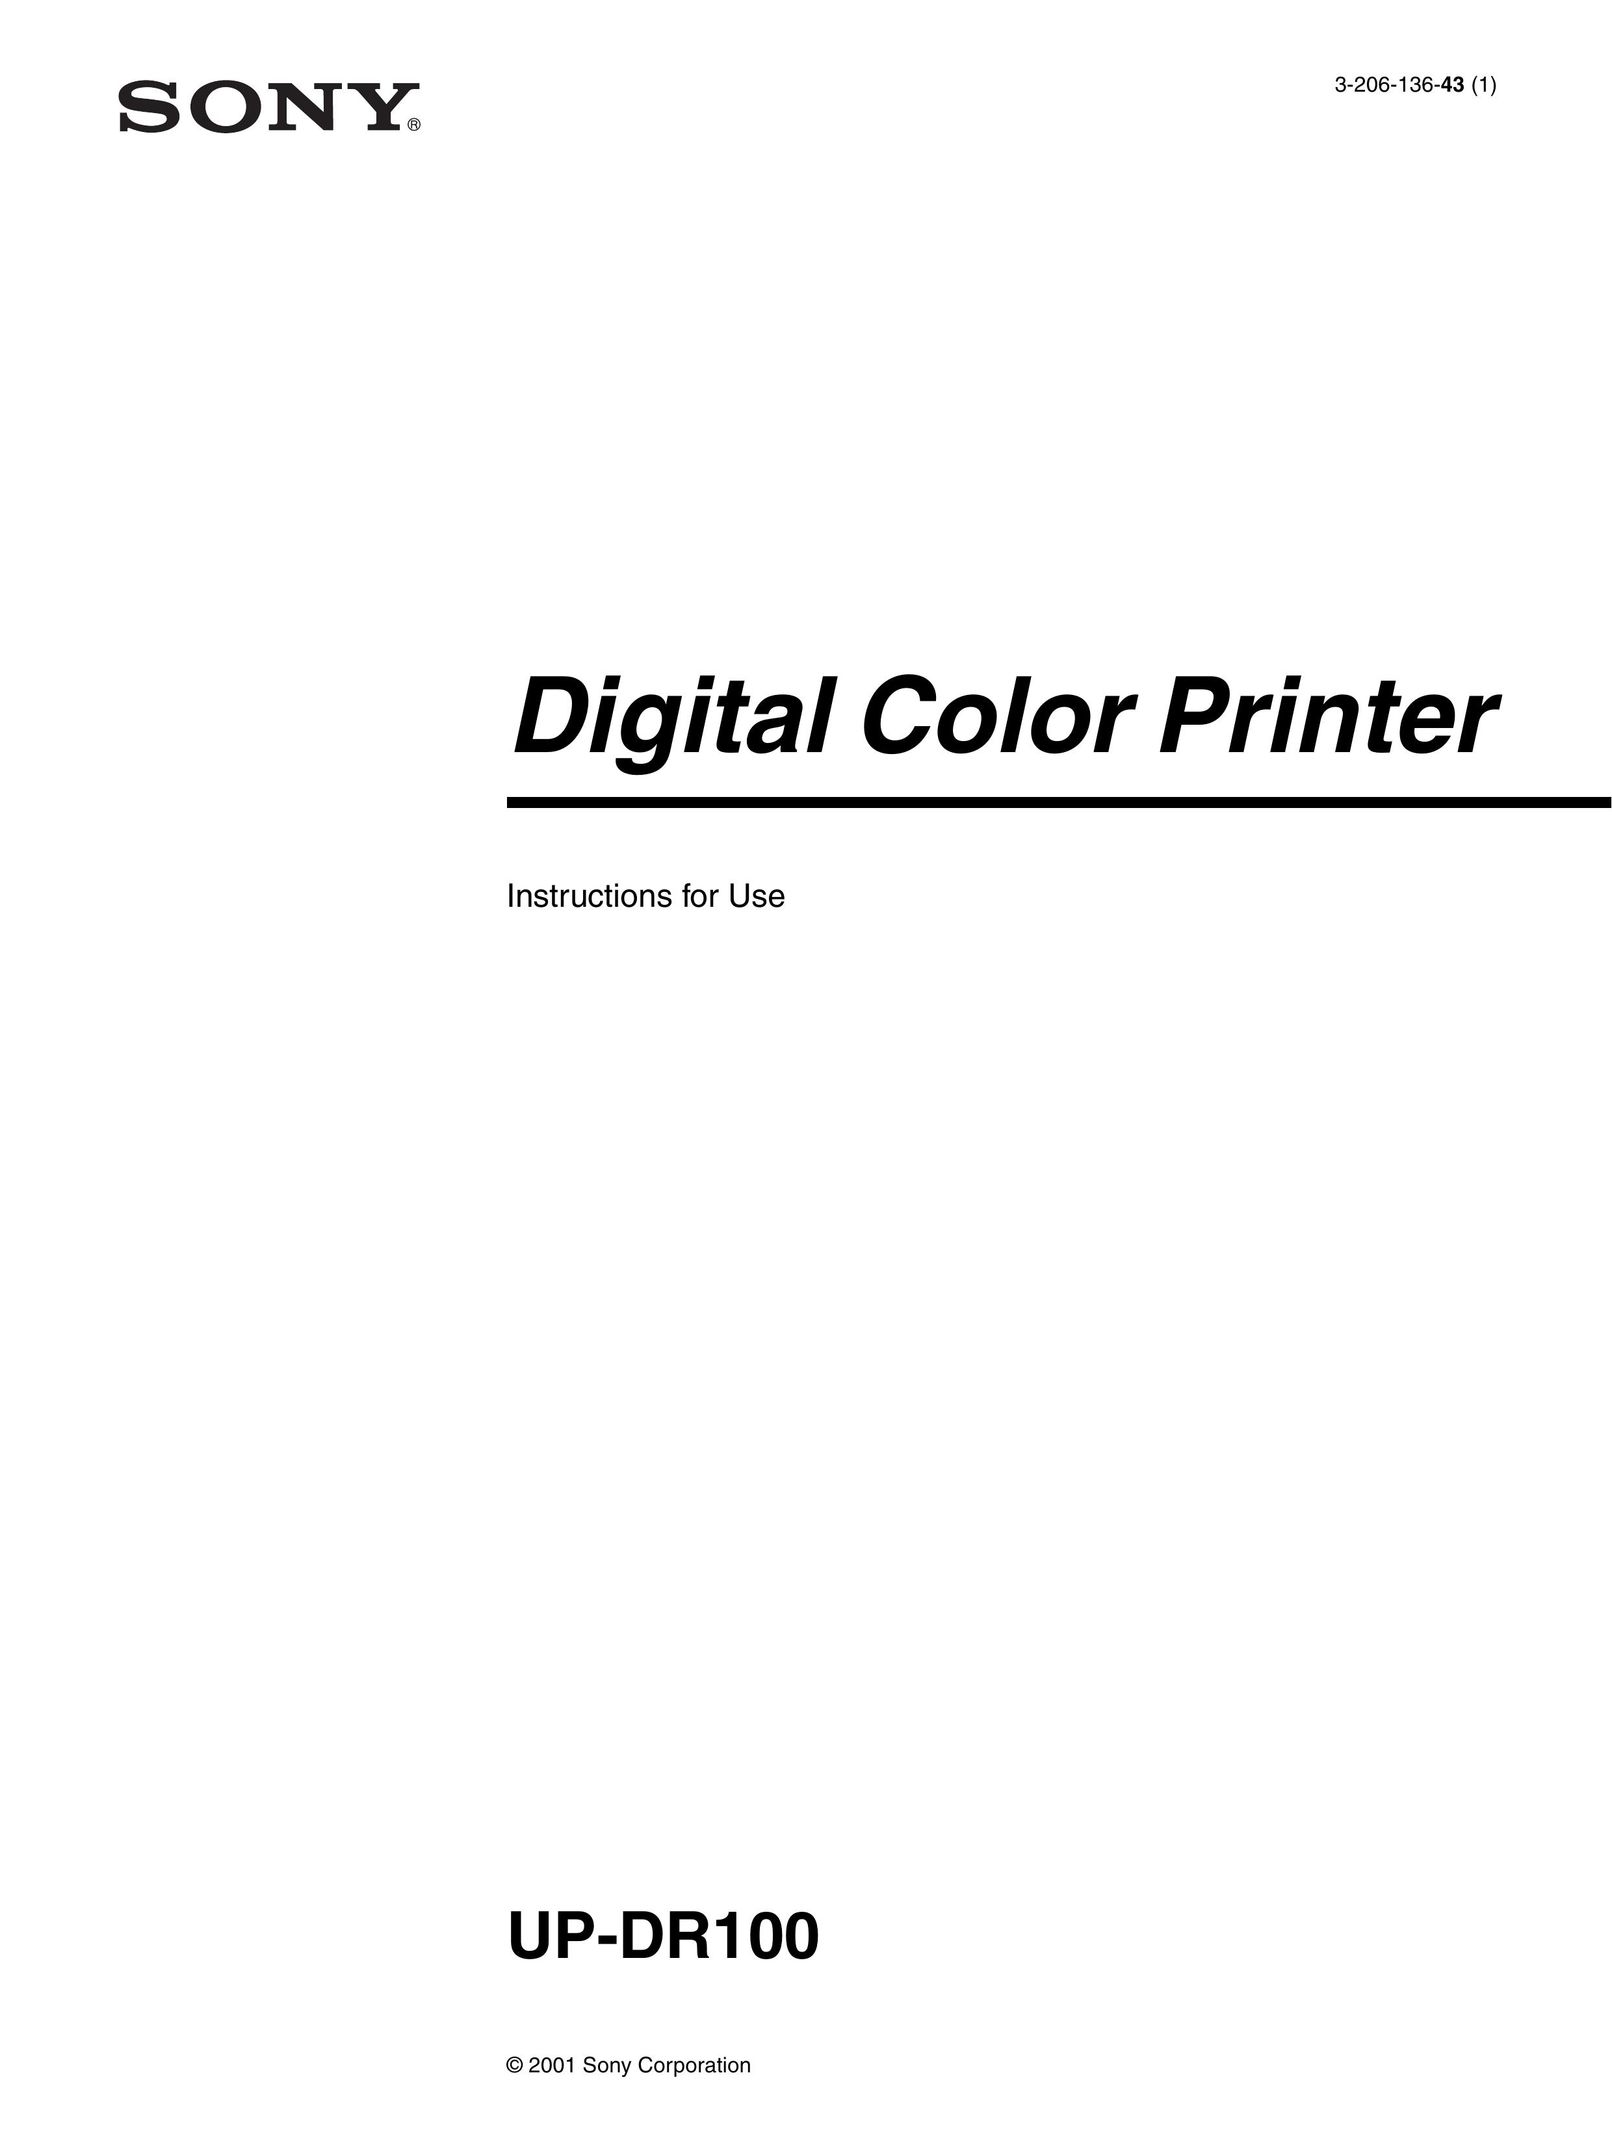 Sony UP-DR100 Printer User Manual